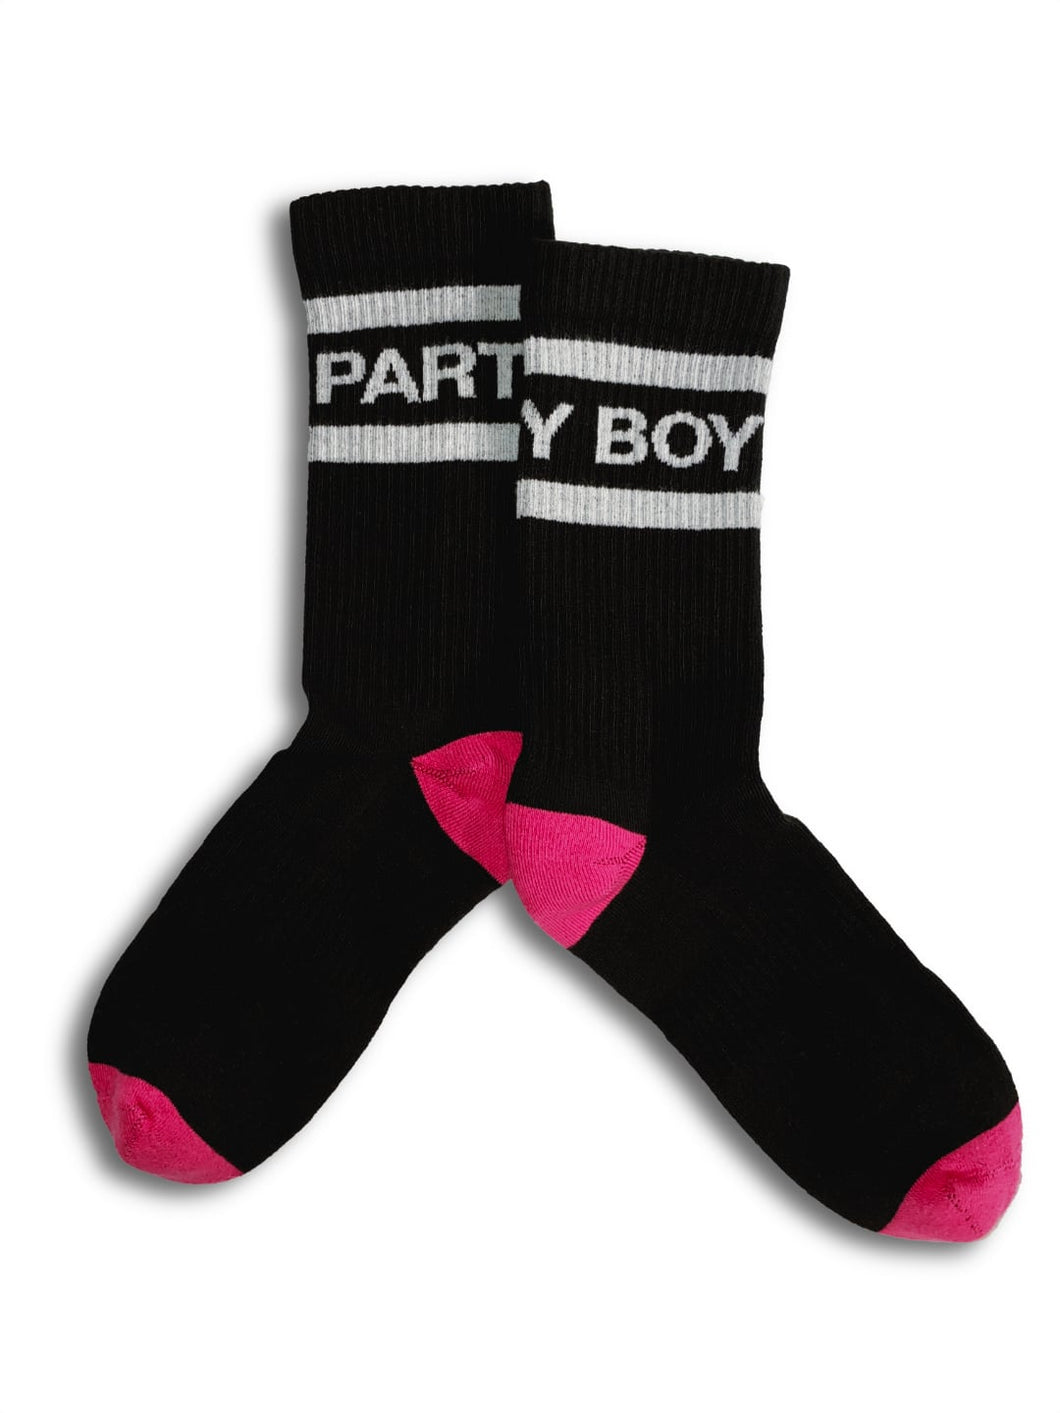 PARTY BOY Socks Black/Pink/Wht